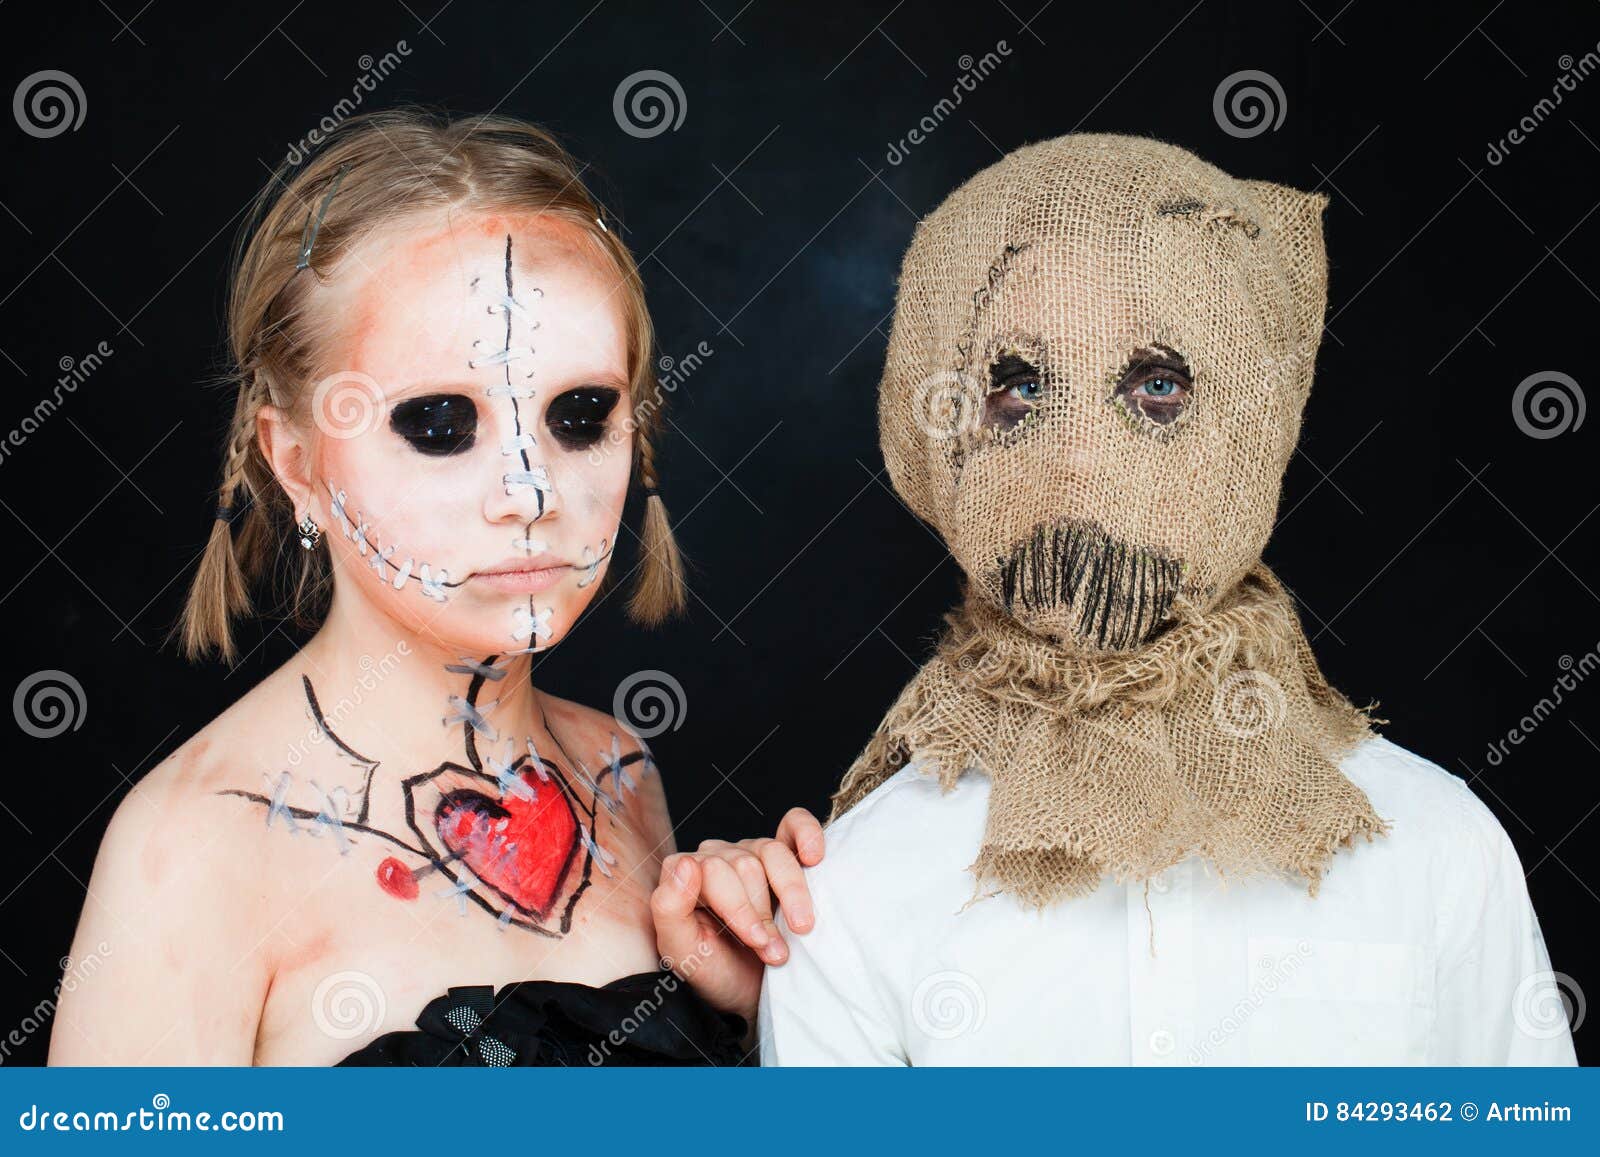 Halloween Dead Doll and Jackstraw. Boy and Girl Hallo Stock Photo Image of beauty: 84293462